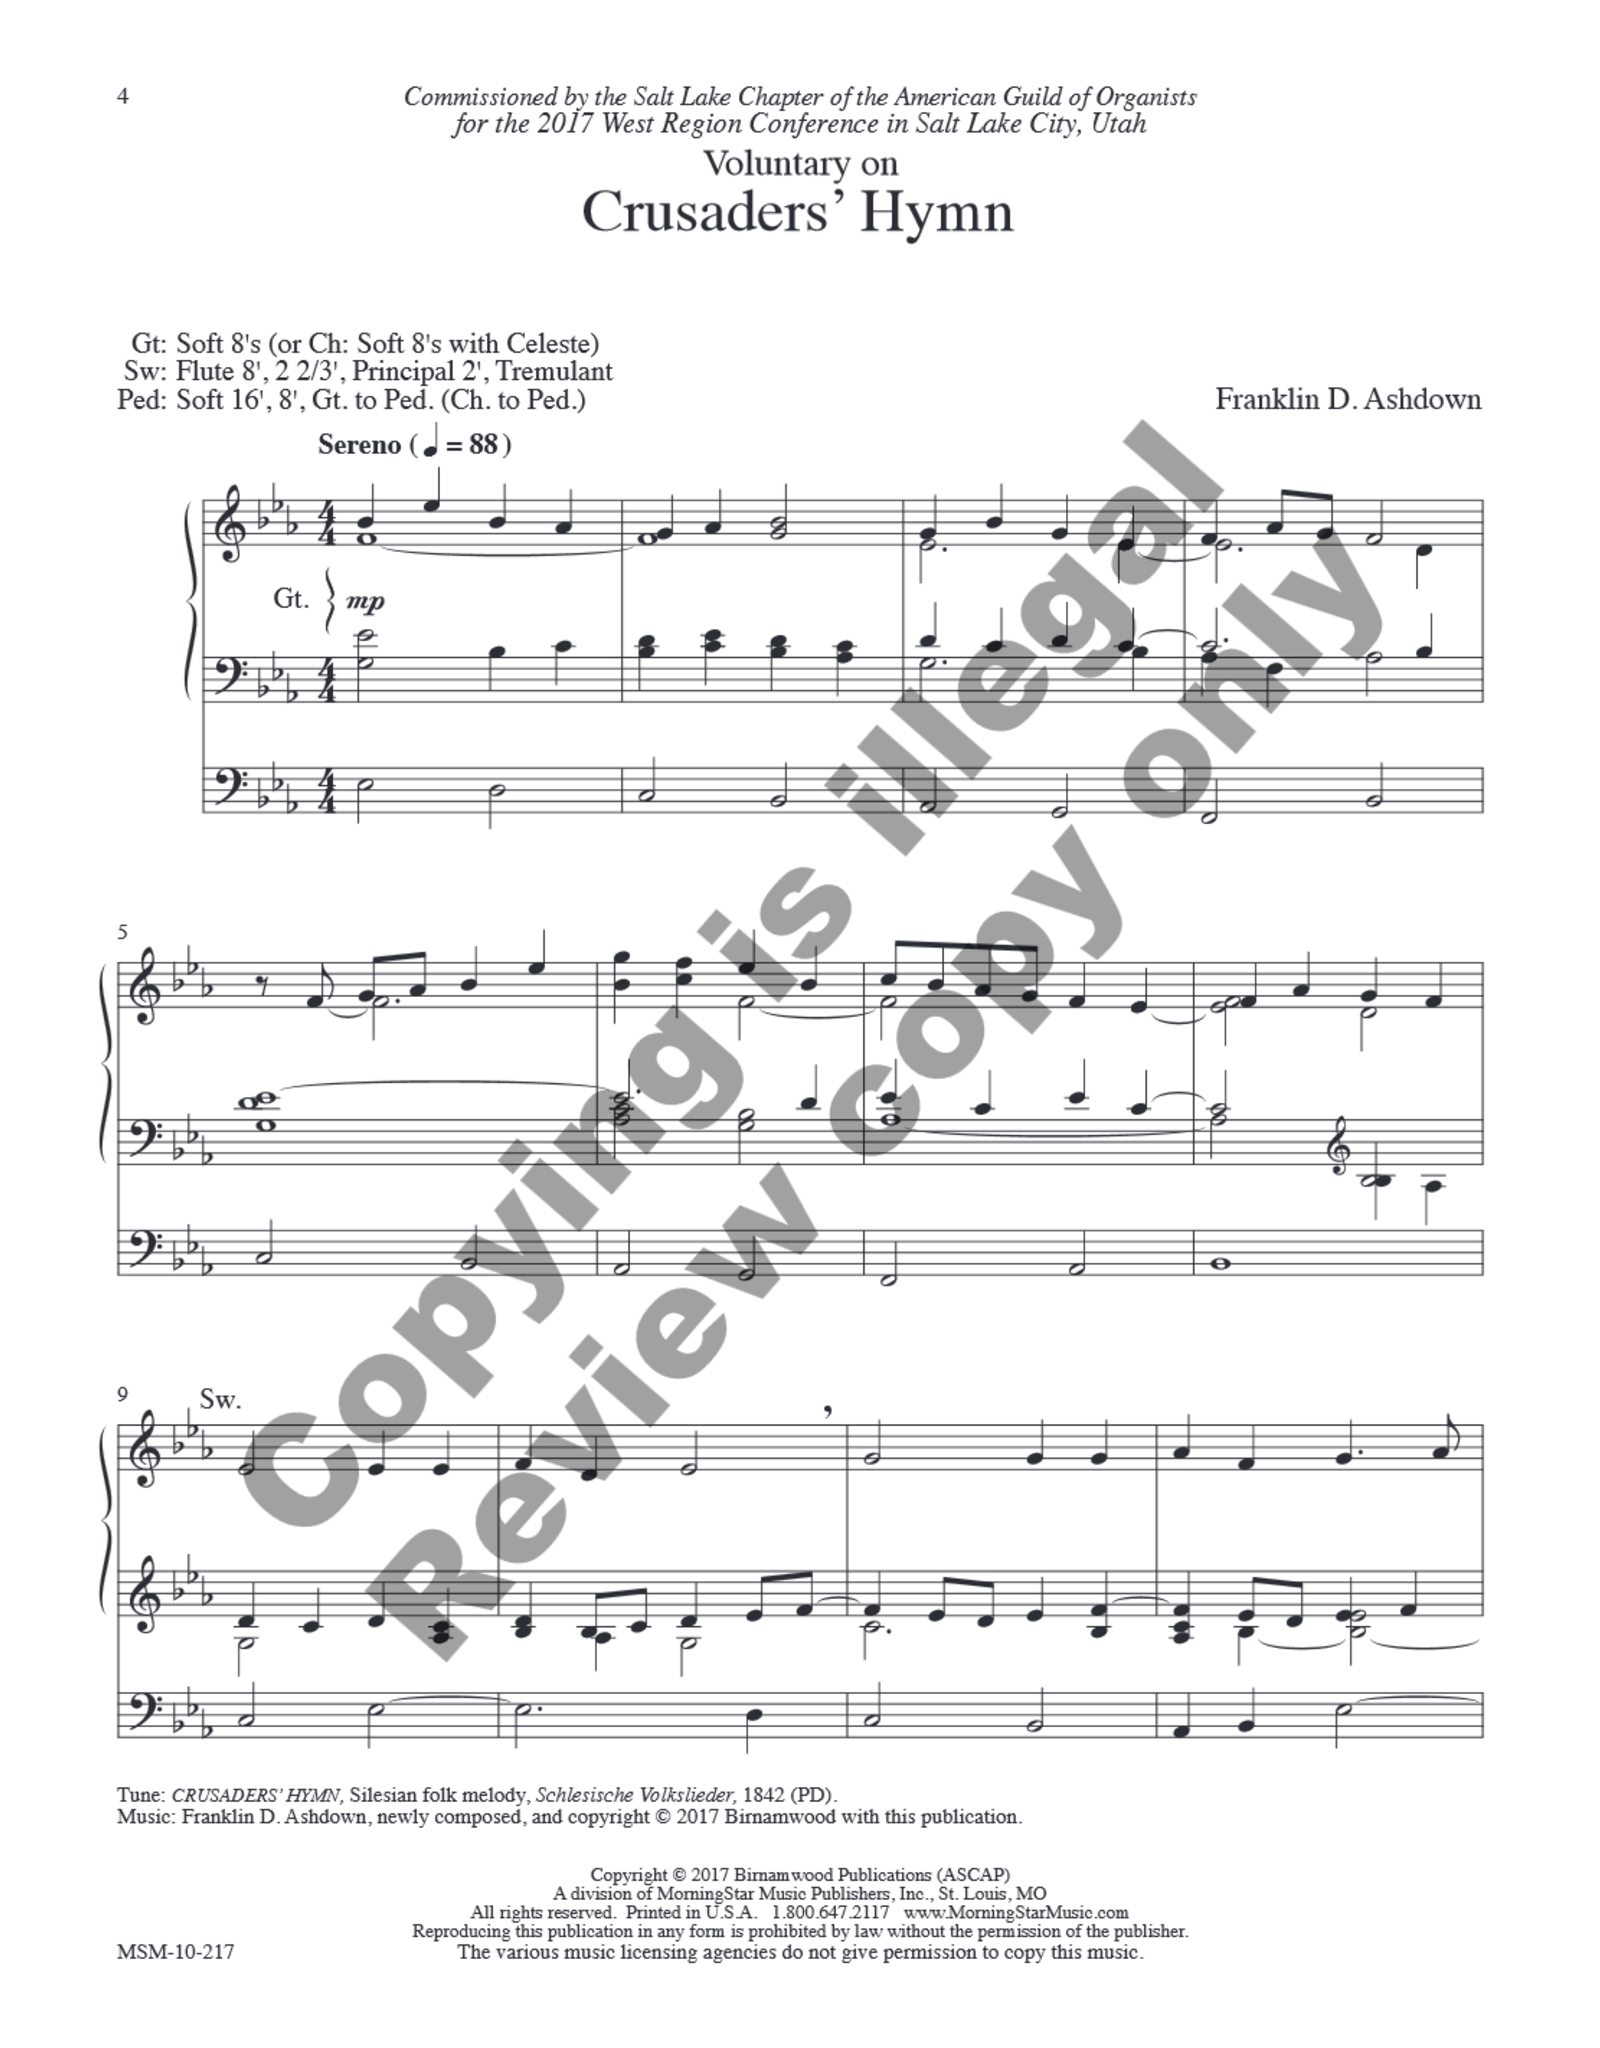 MorningStar Reflections: Nine Hymn Arrangements Celebrating 150 Years of Organ Music in Salt Lake City